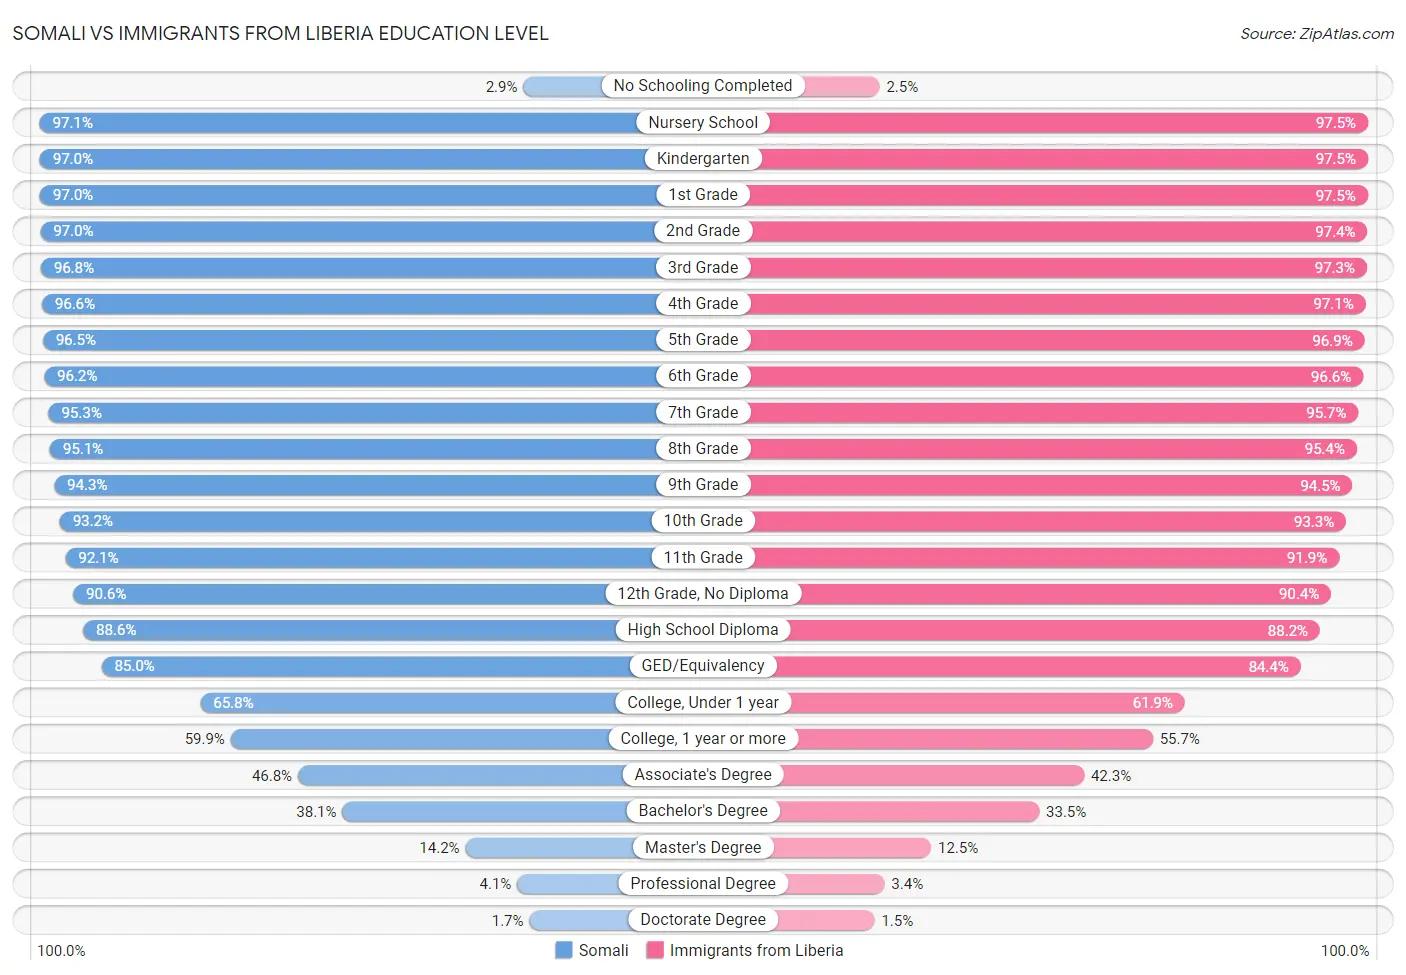 Somali vs Immigrants from Liberia Education Level